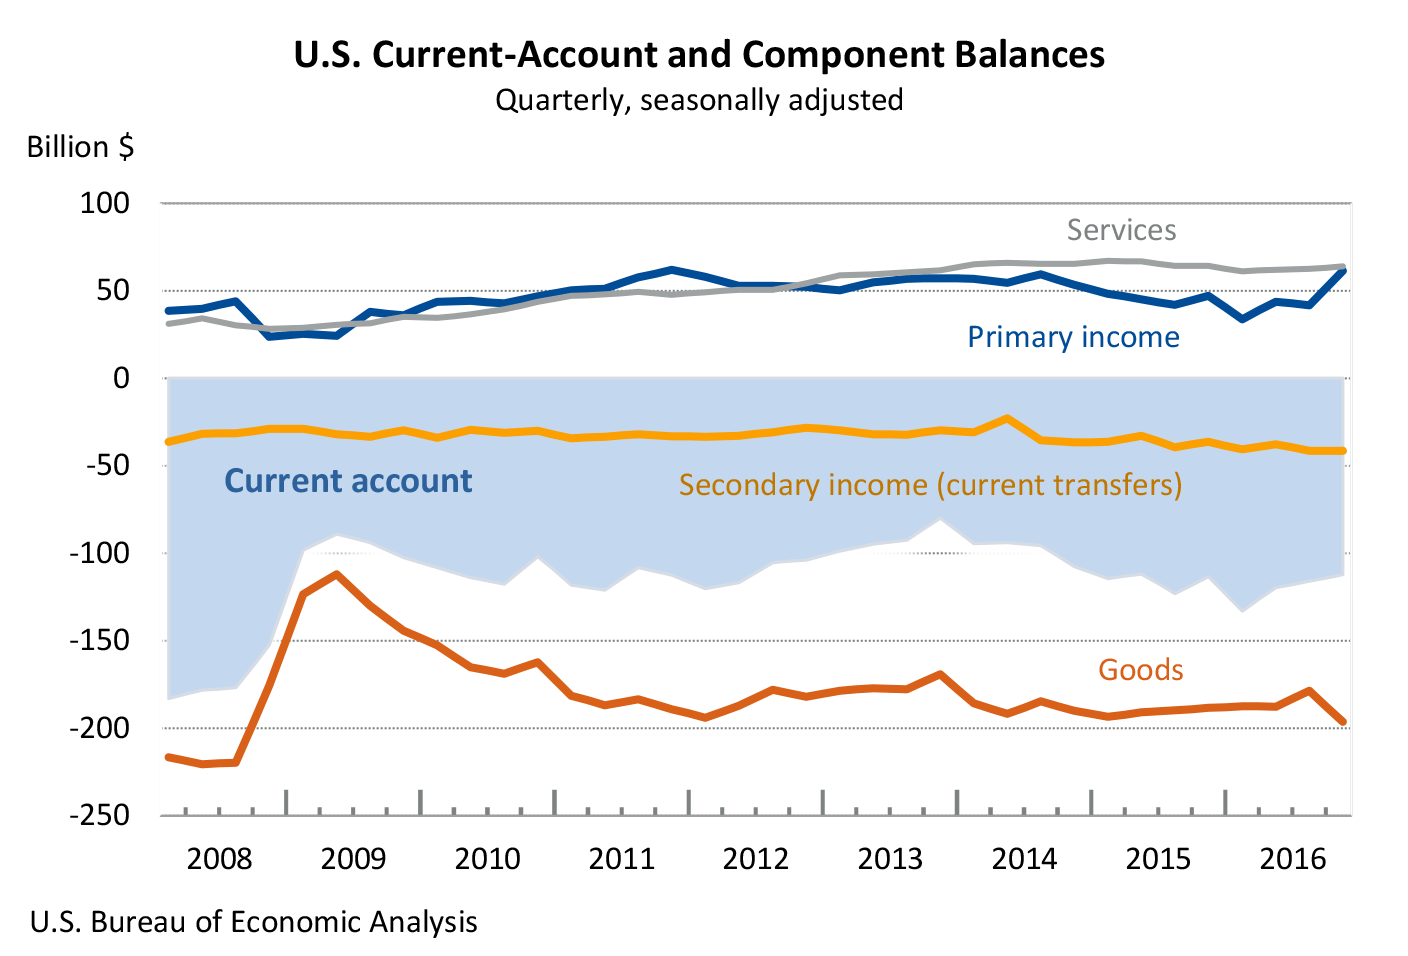 U.S. Current-Account and Component Balances Chart